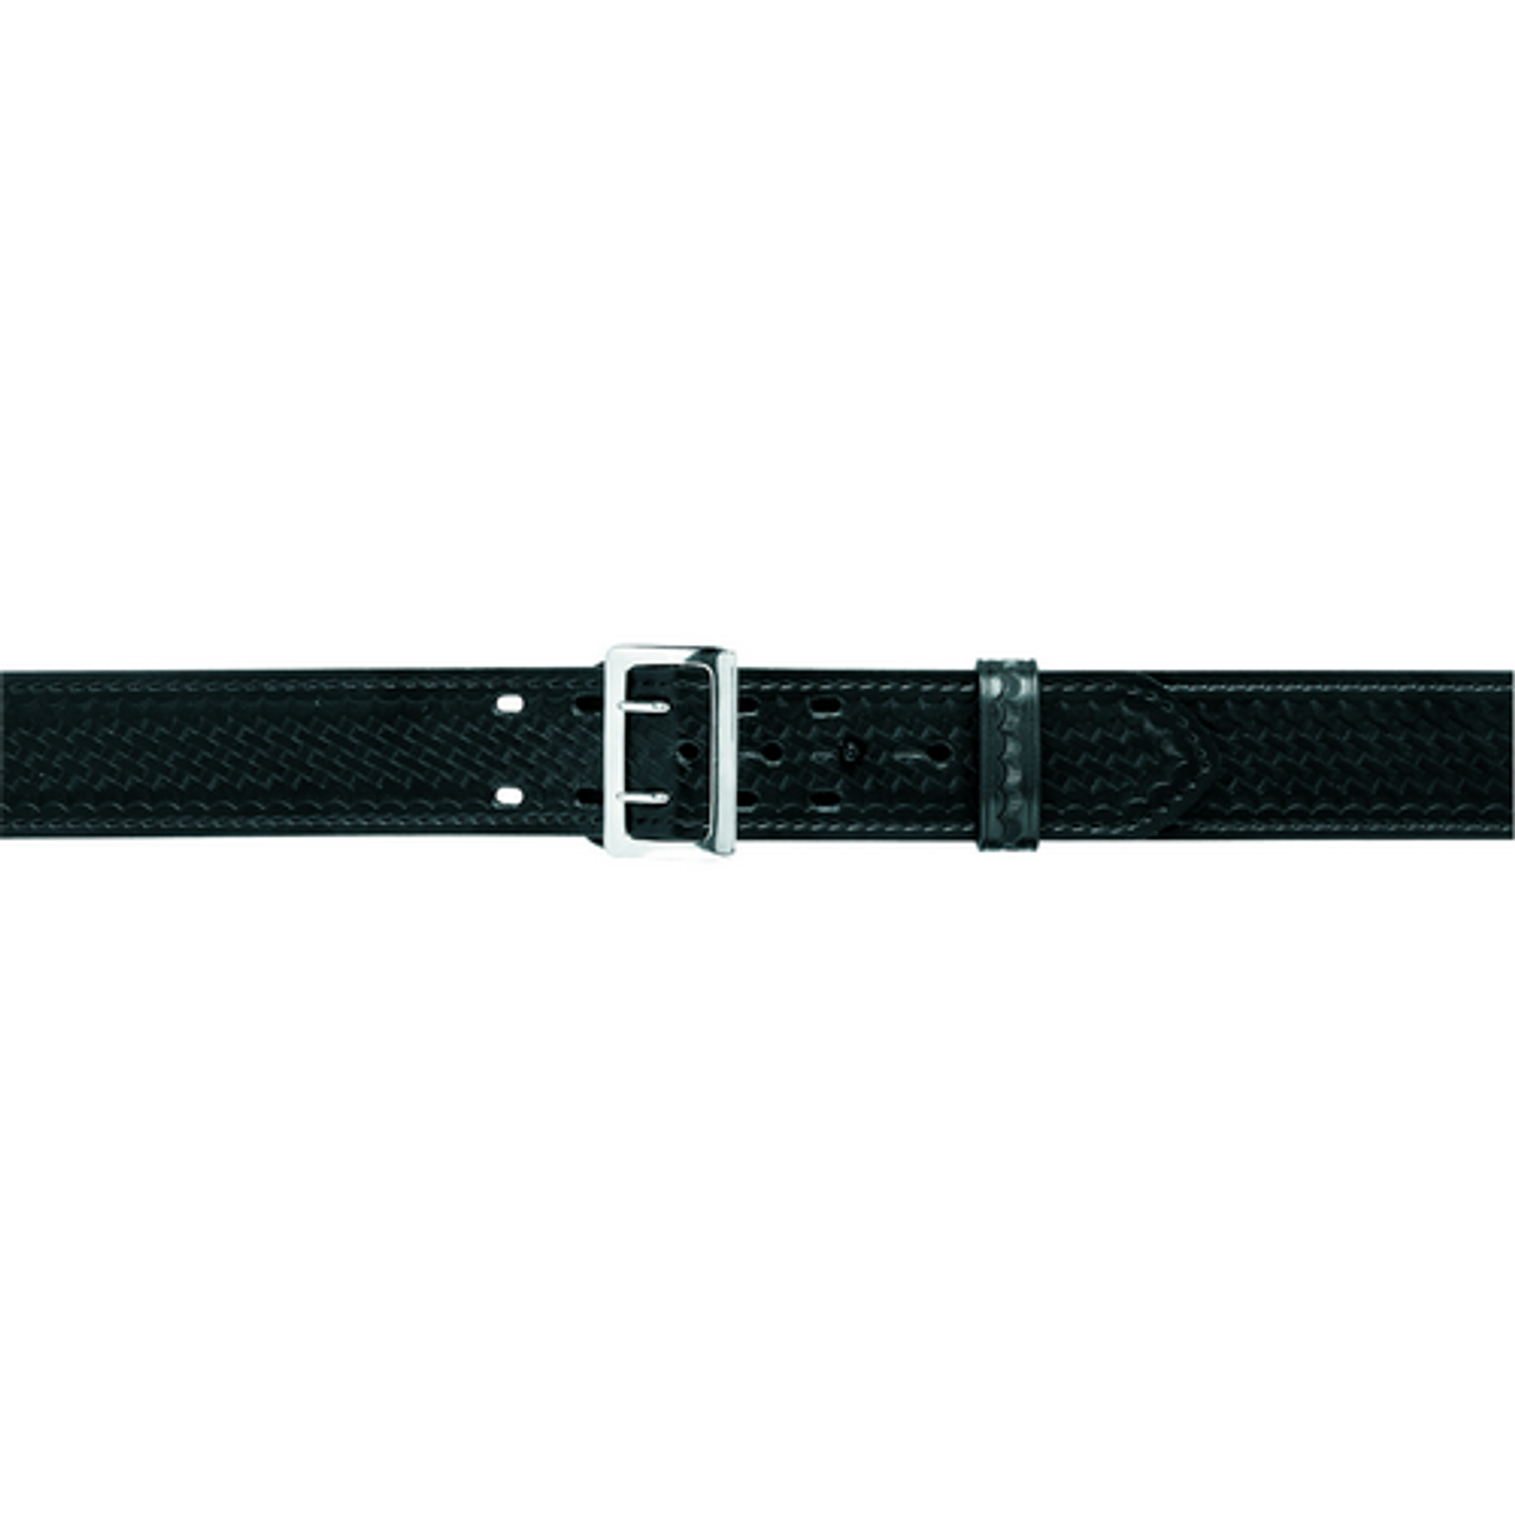 87 - Sam Browne Buckled Duty Belt, 2.25 (58mm) - KR87-44-9